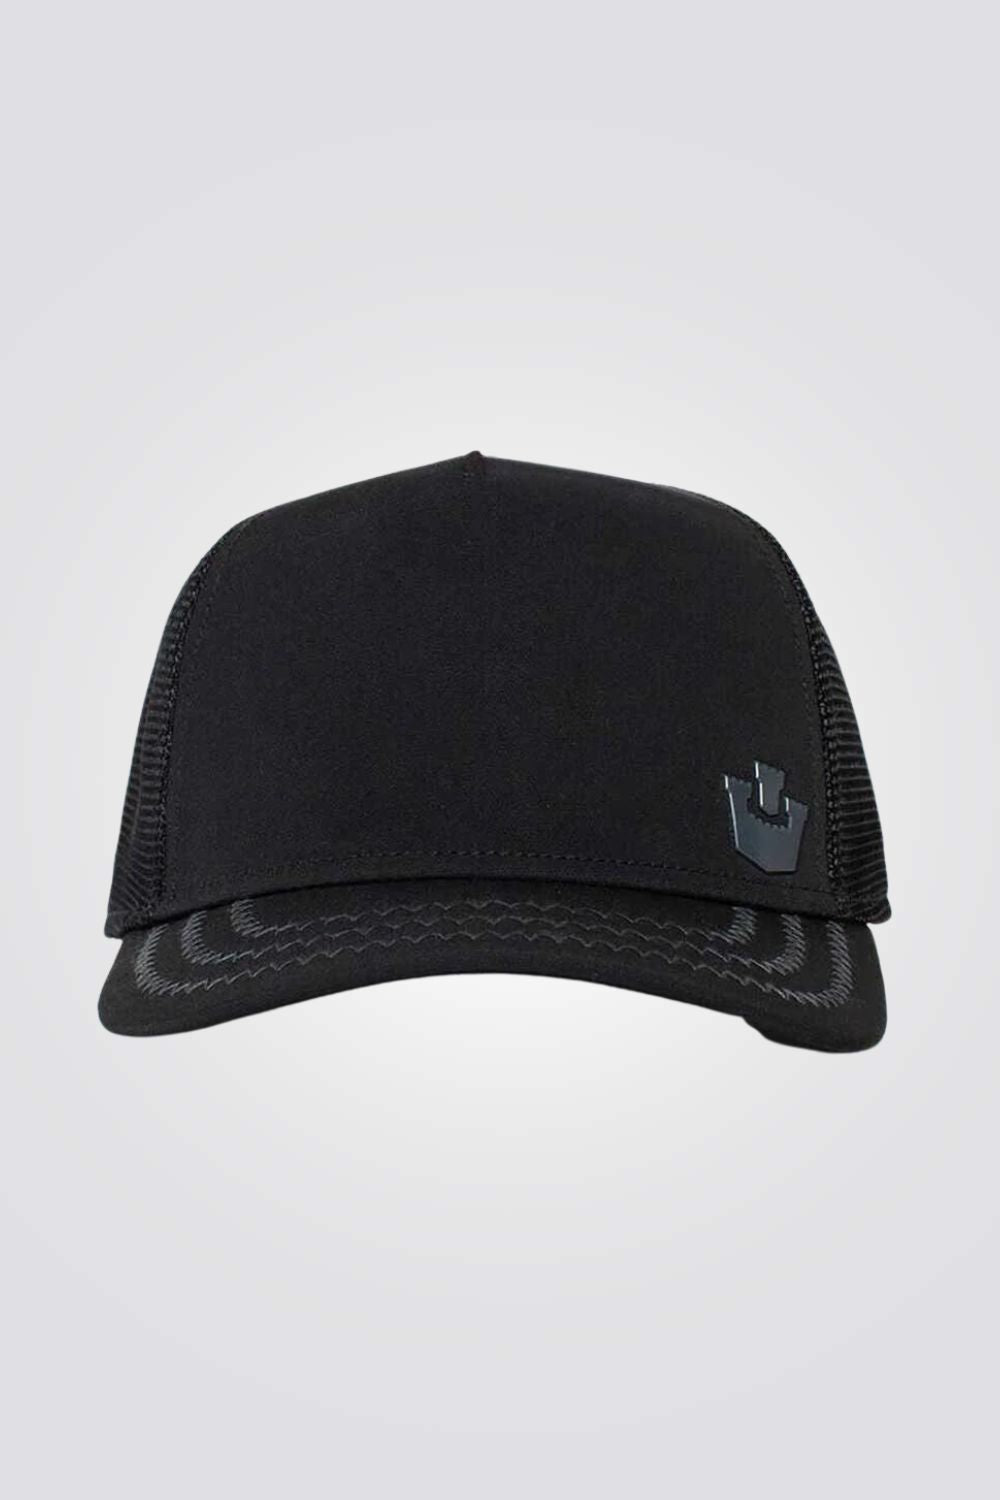 GOORIN - כובע מצחייה GATEWAY בצבע שחור - MASHBIR//365